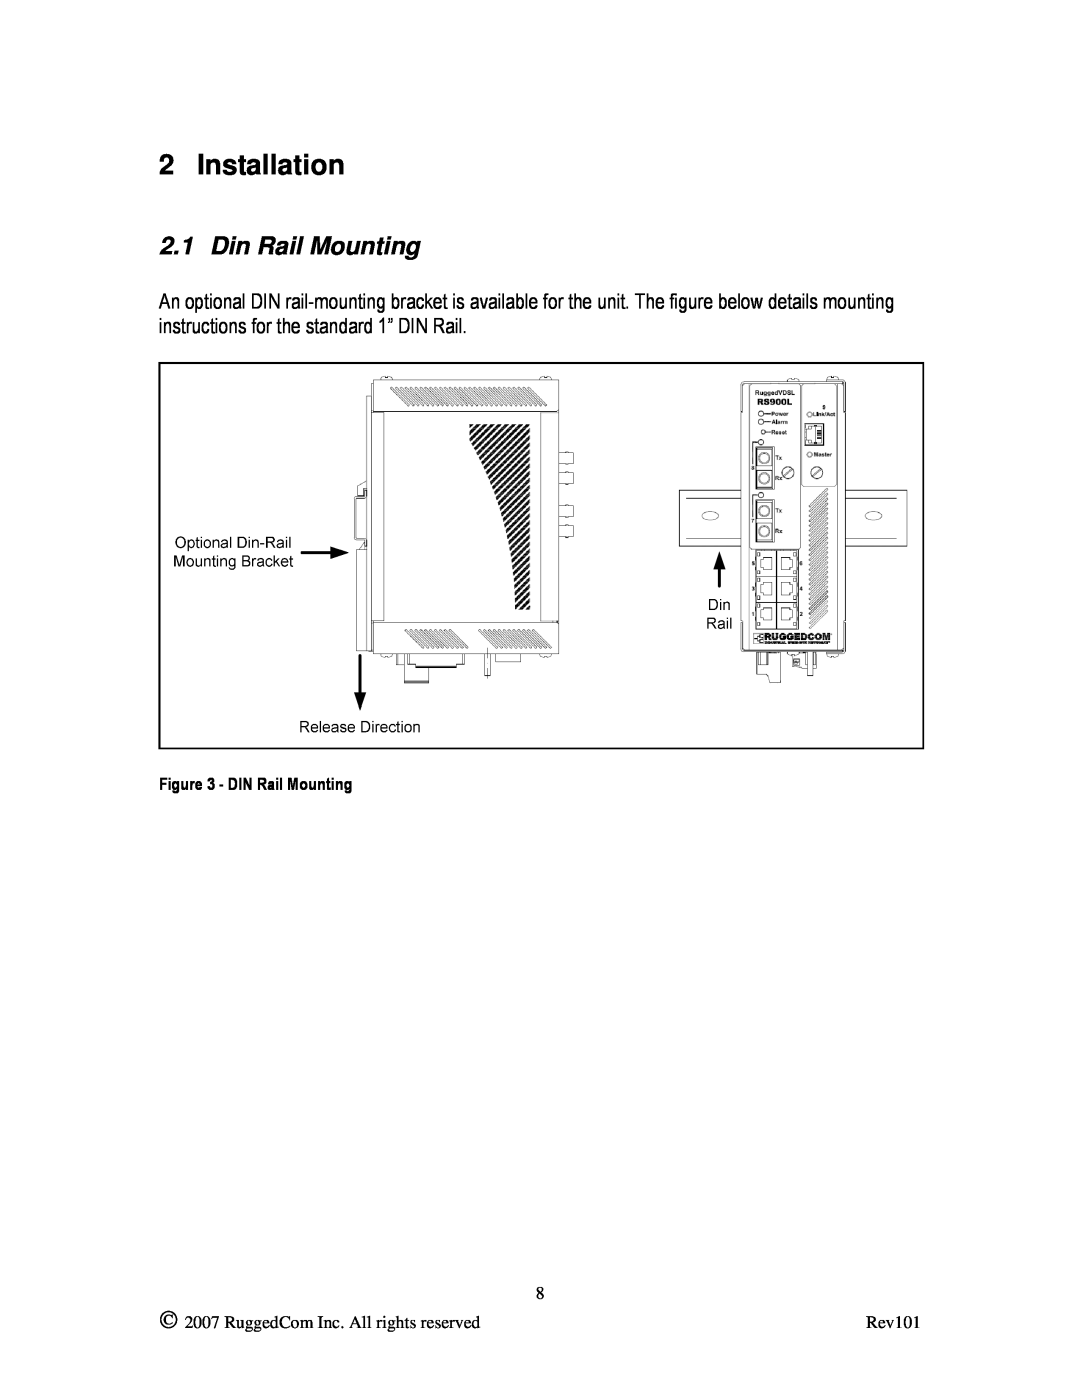 RuggedCom RS900L manual Installation, Din Rail Mounting,  2007 RuggedCom Inc. All rights reserved, Rev101 